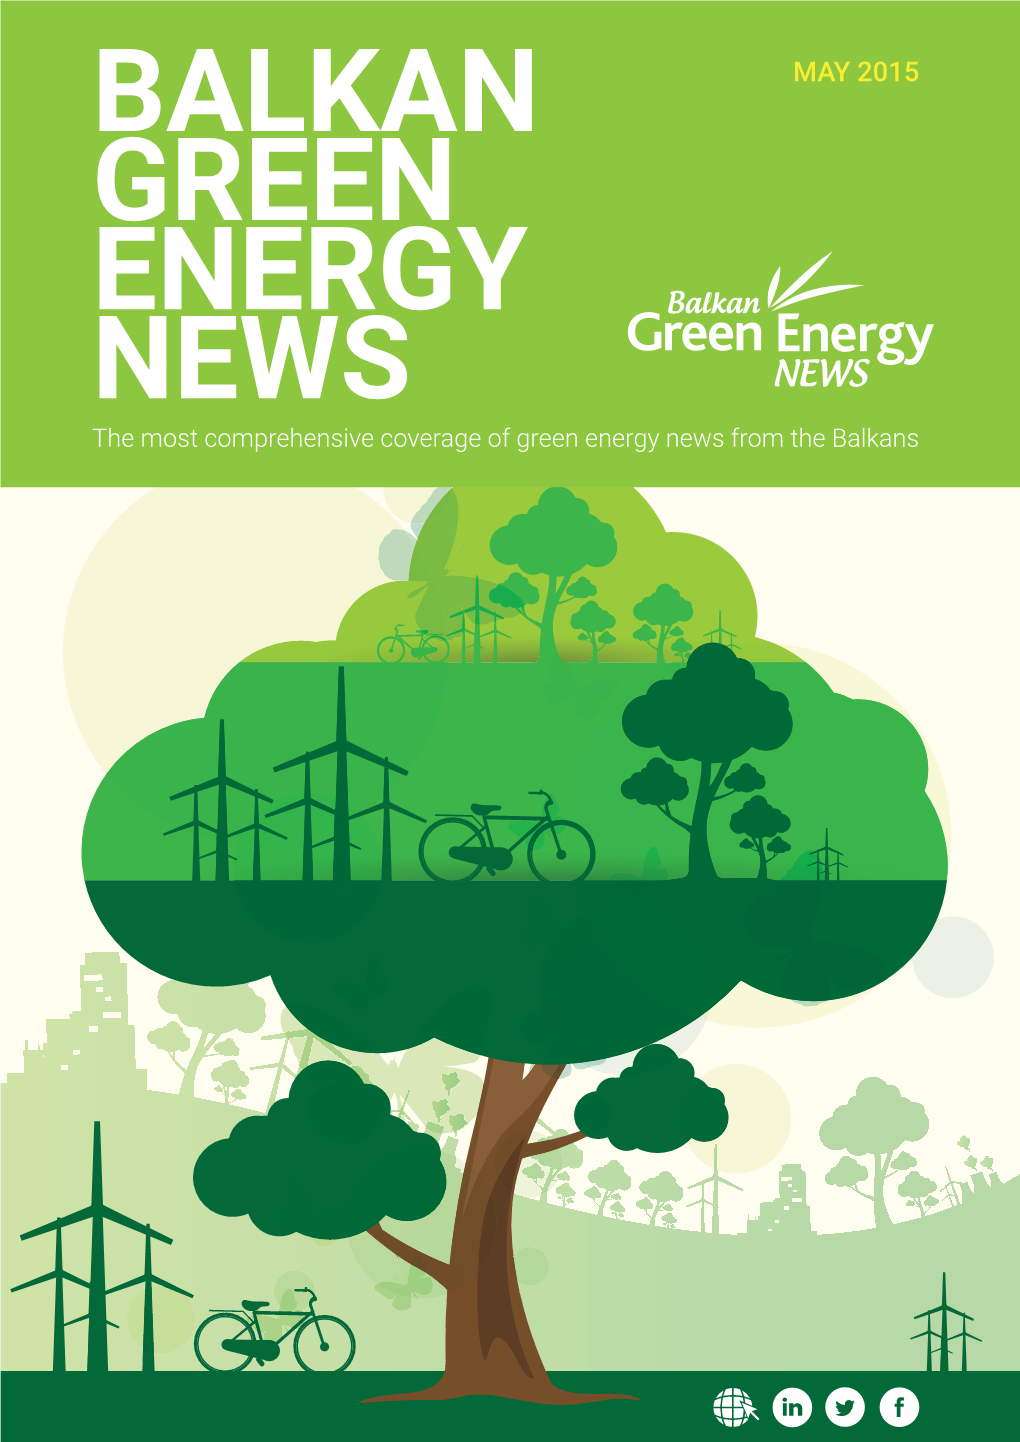 Balkan Green Energy News